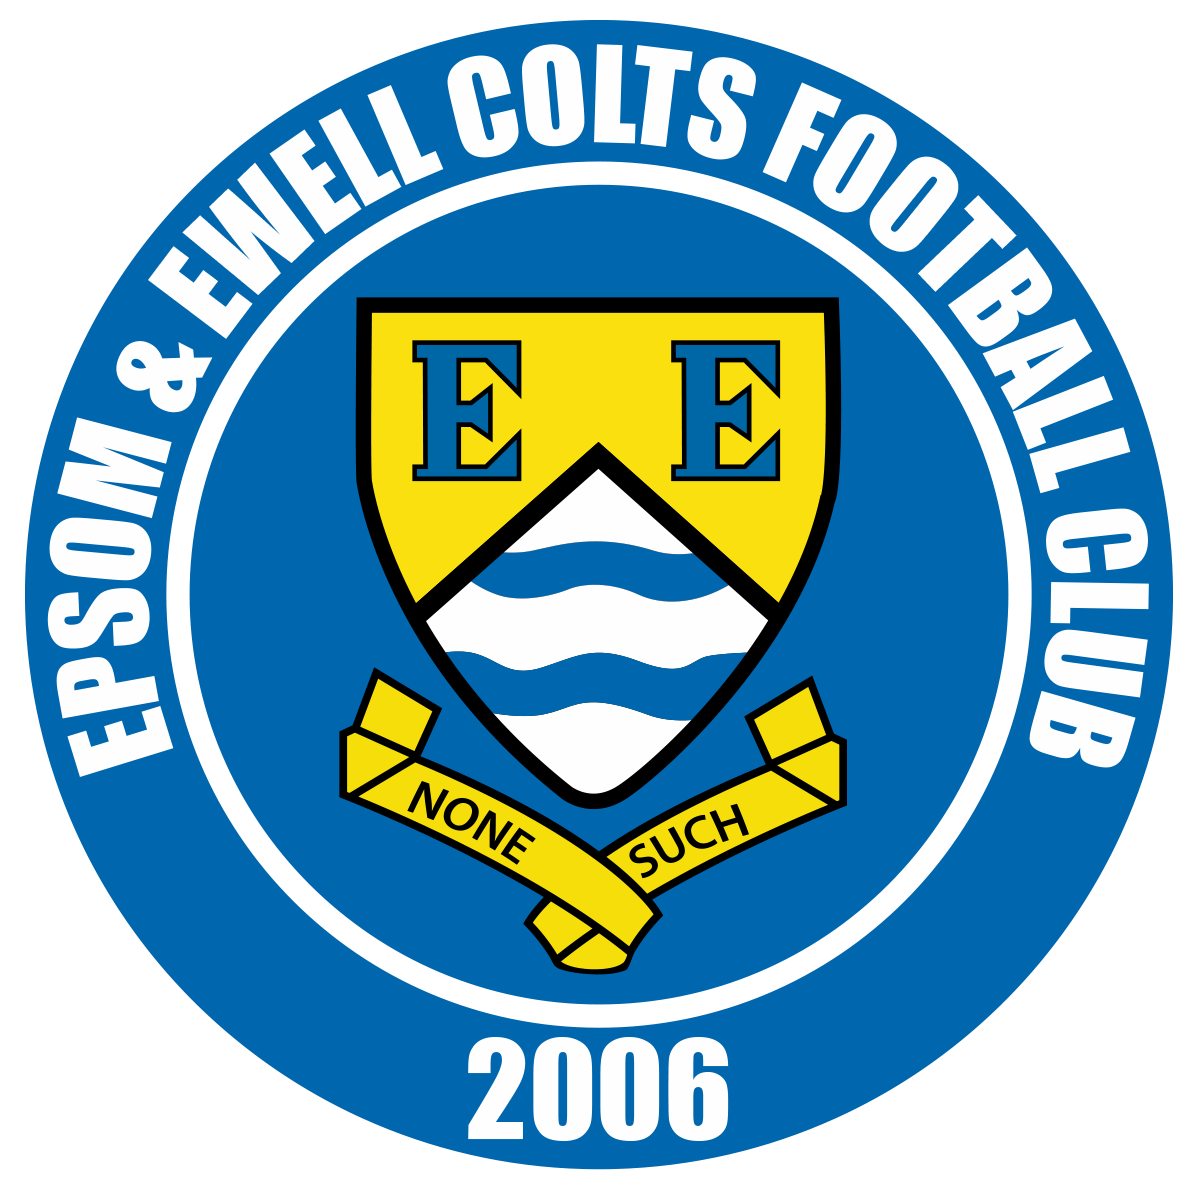 Epsom & Ewell Colts FC